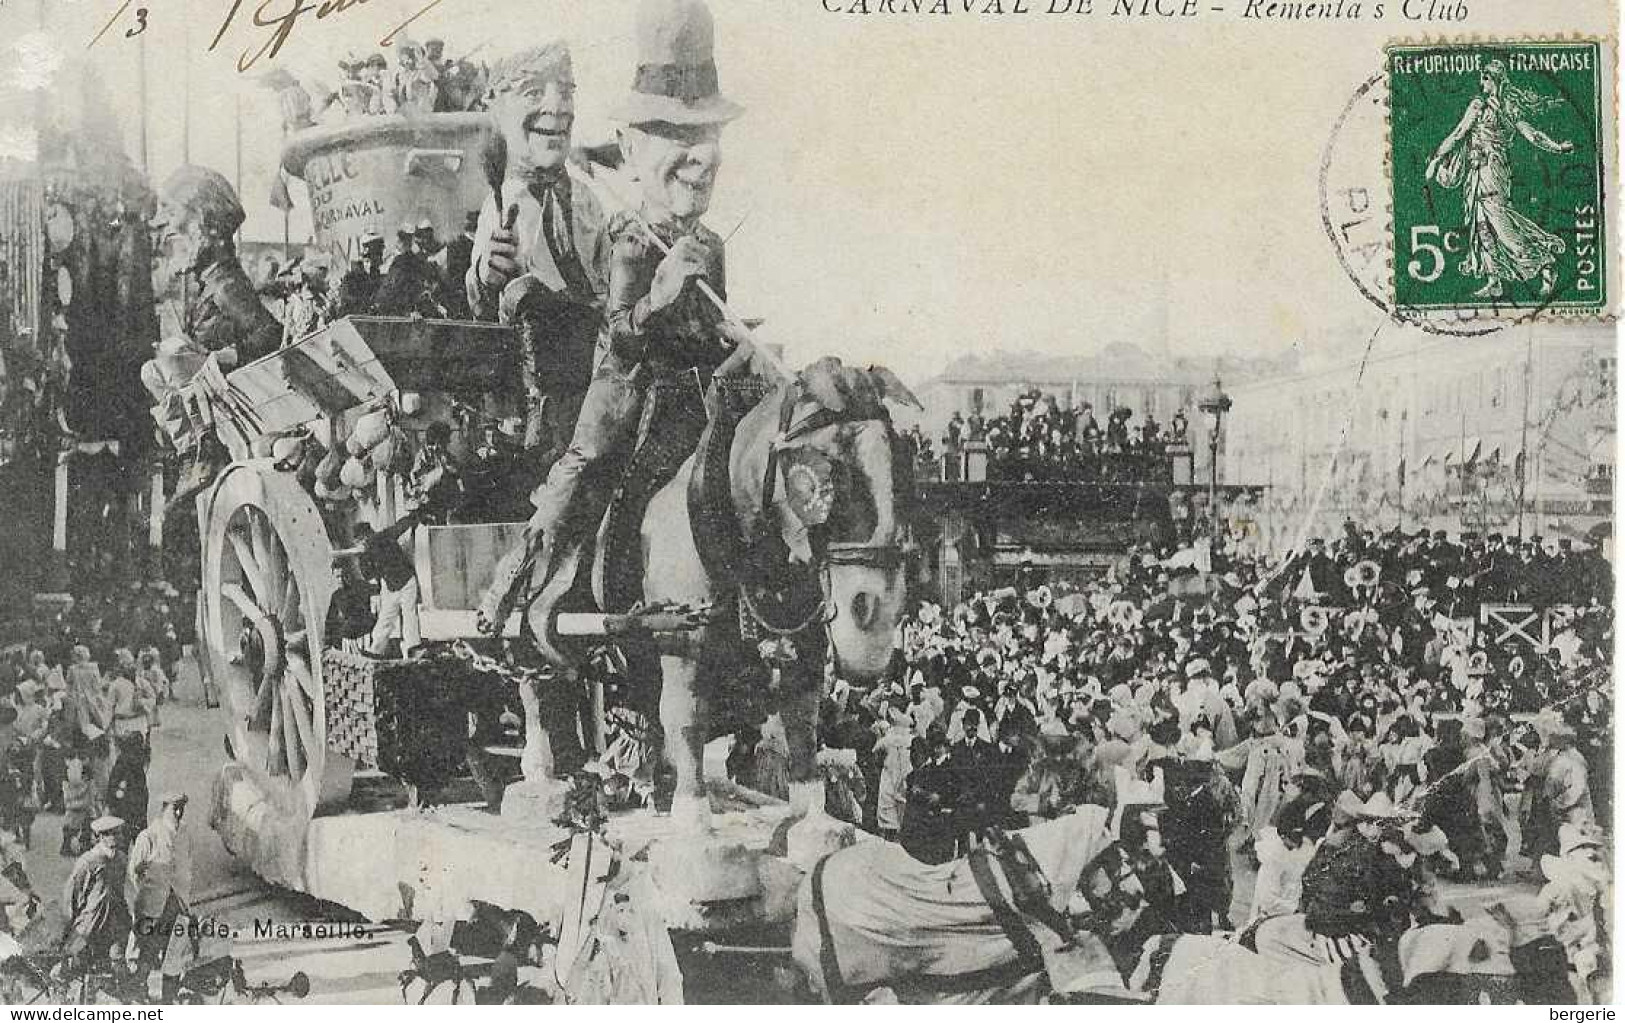 C/274              06    Nice    -    Carnaval  De 1909   -   Rementa'club - Carnaval